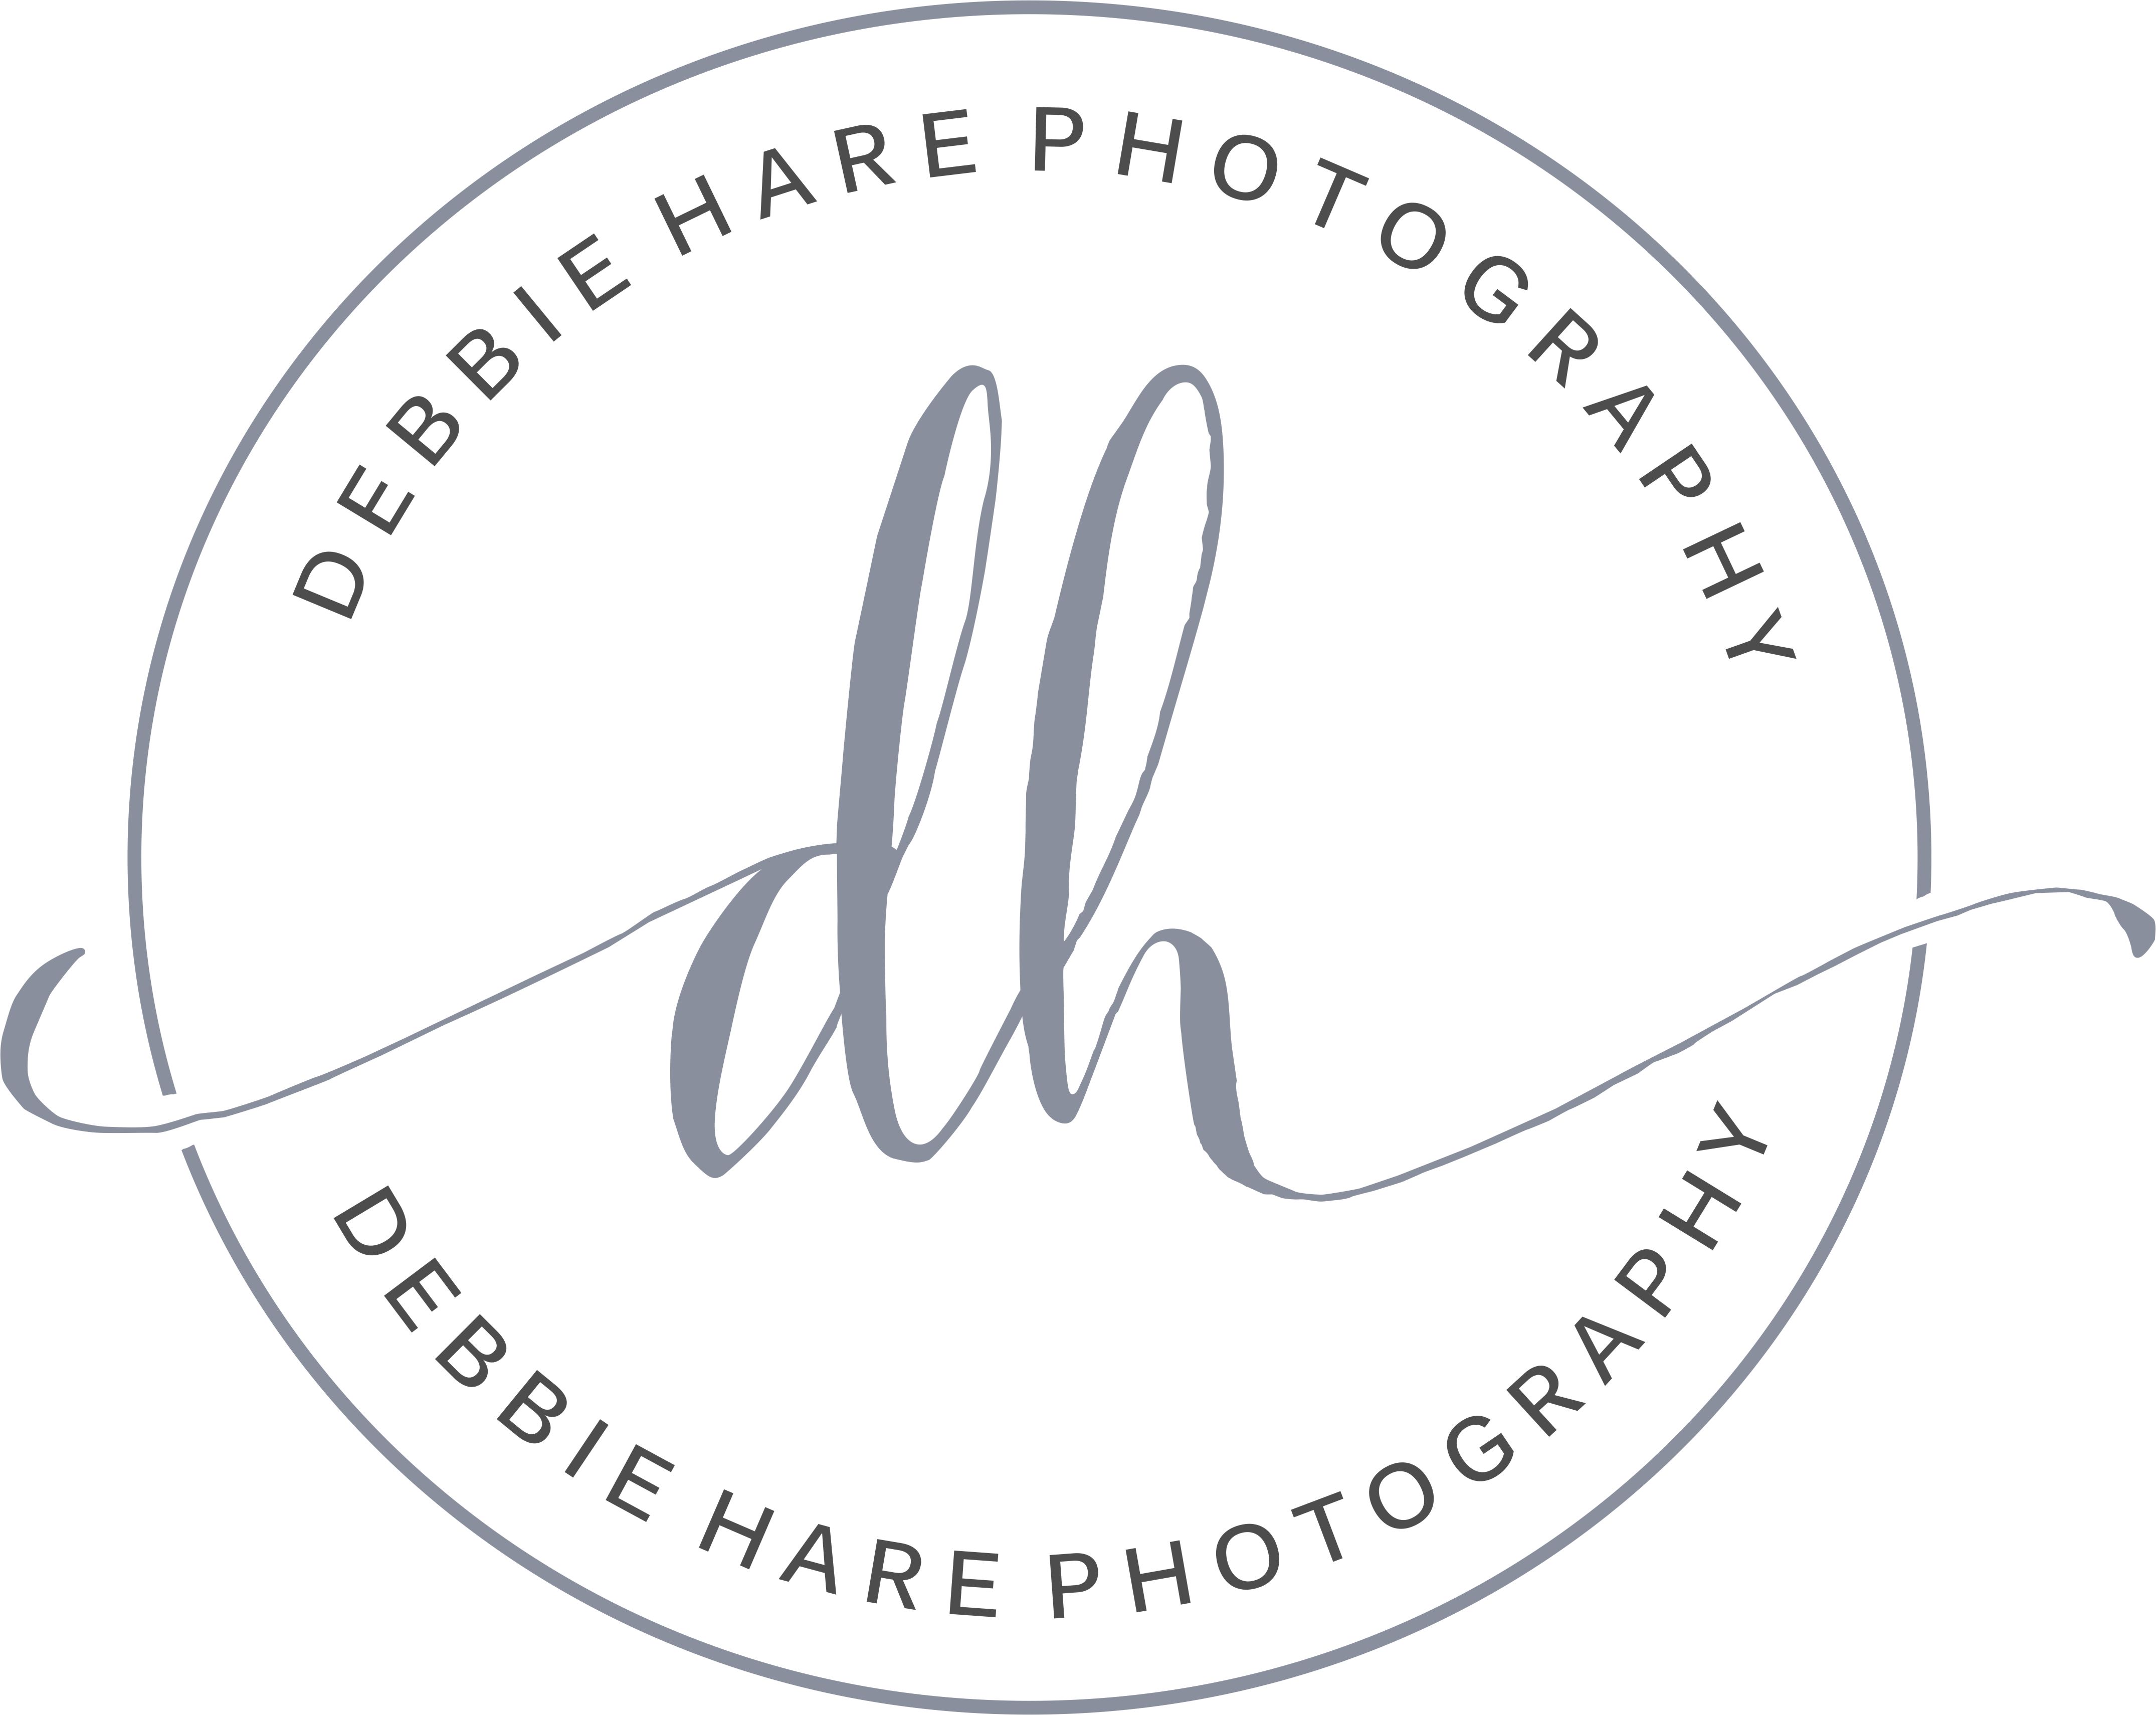 Debbie Hare